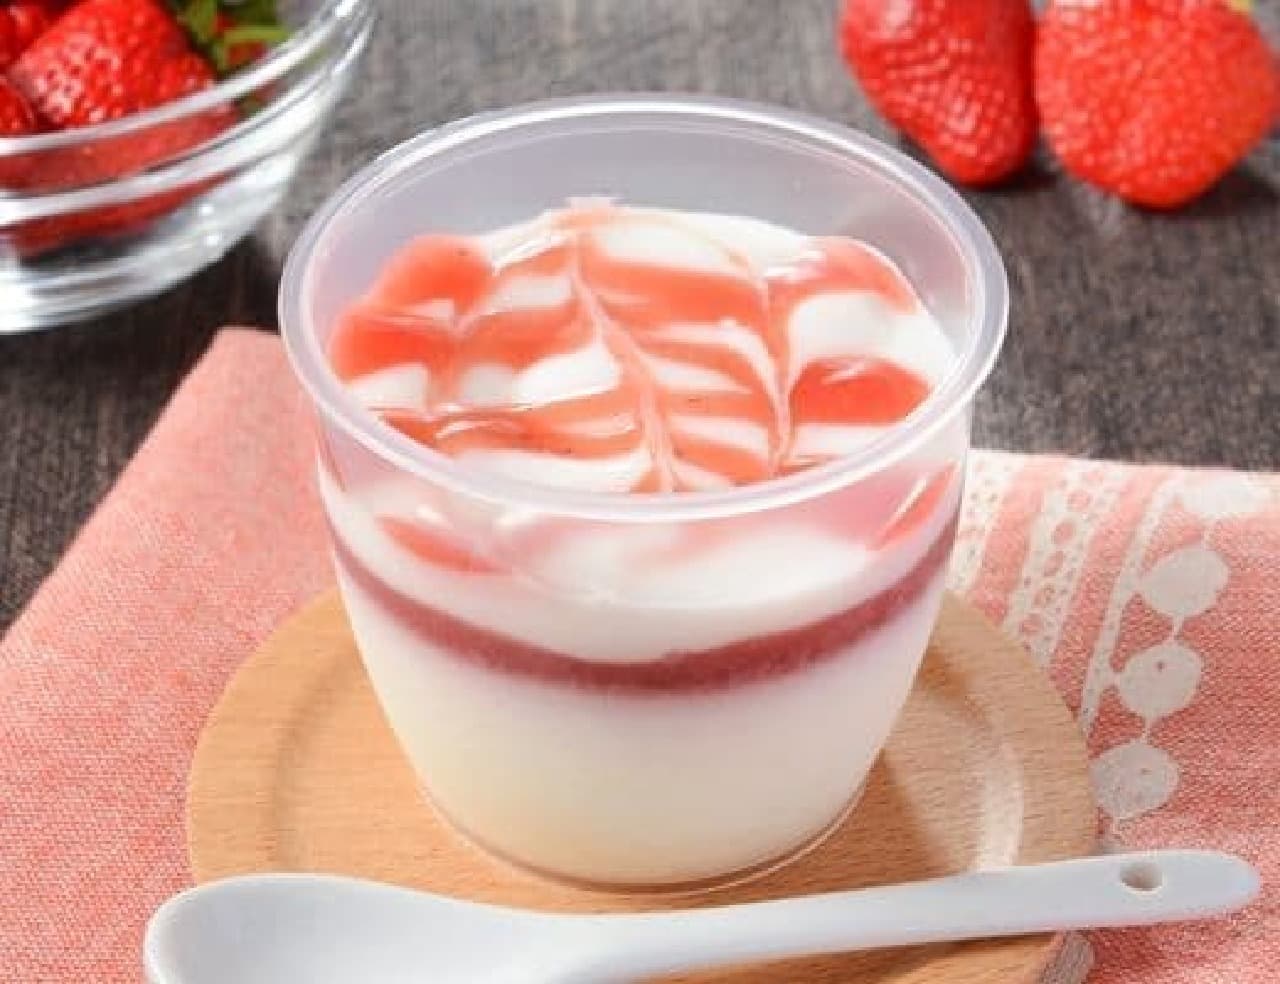 Lawson "Putron Toro Toro Double Pudding Strawberry Milk"